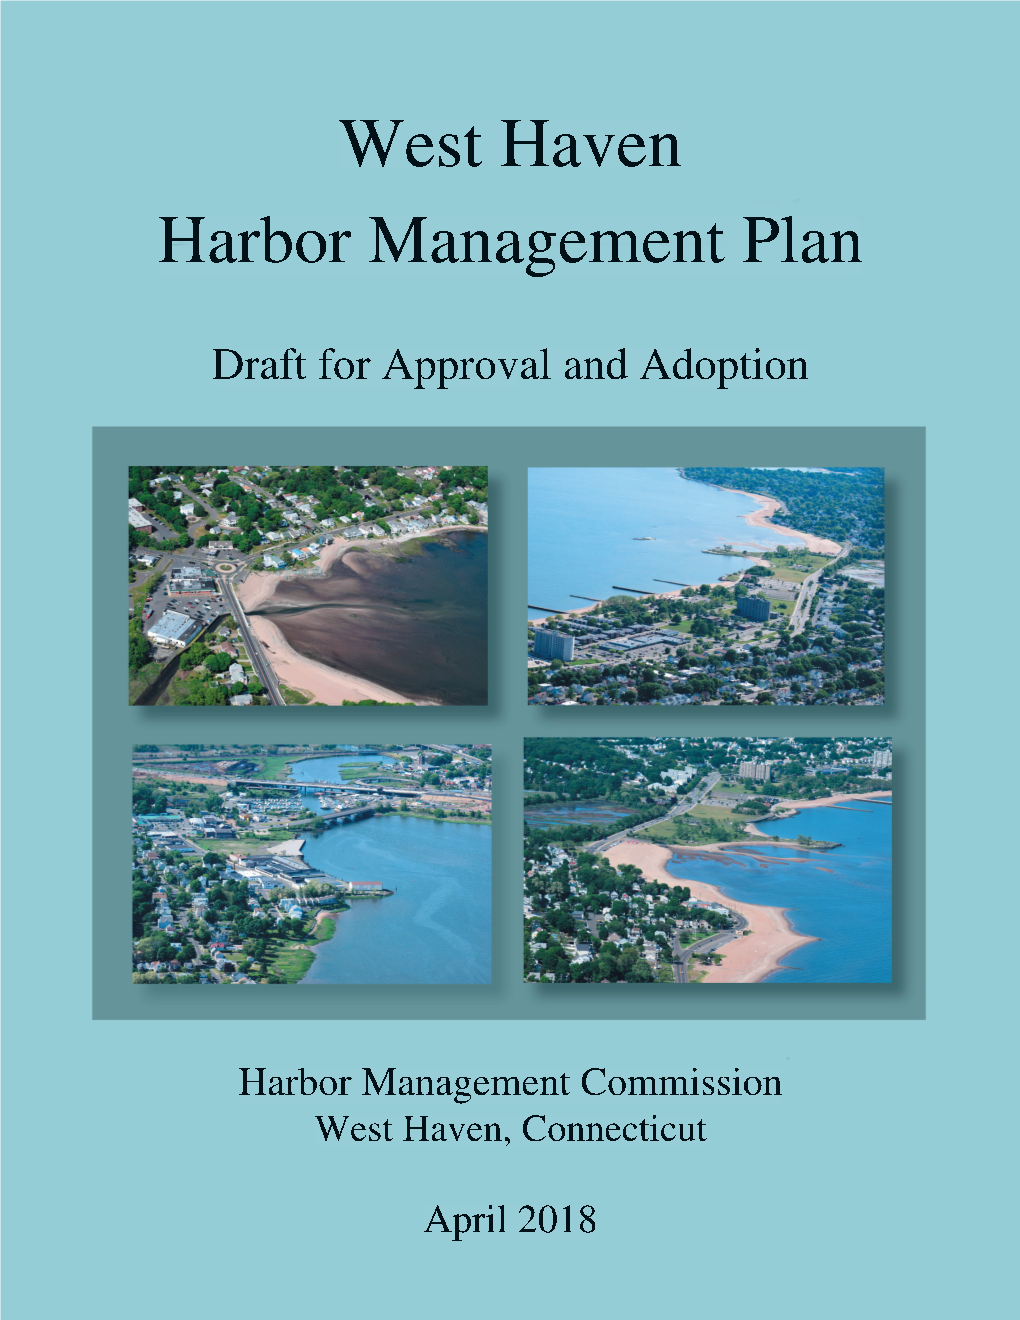 City of West Haven Harbor Management Plan